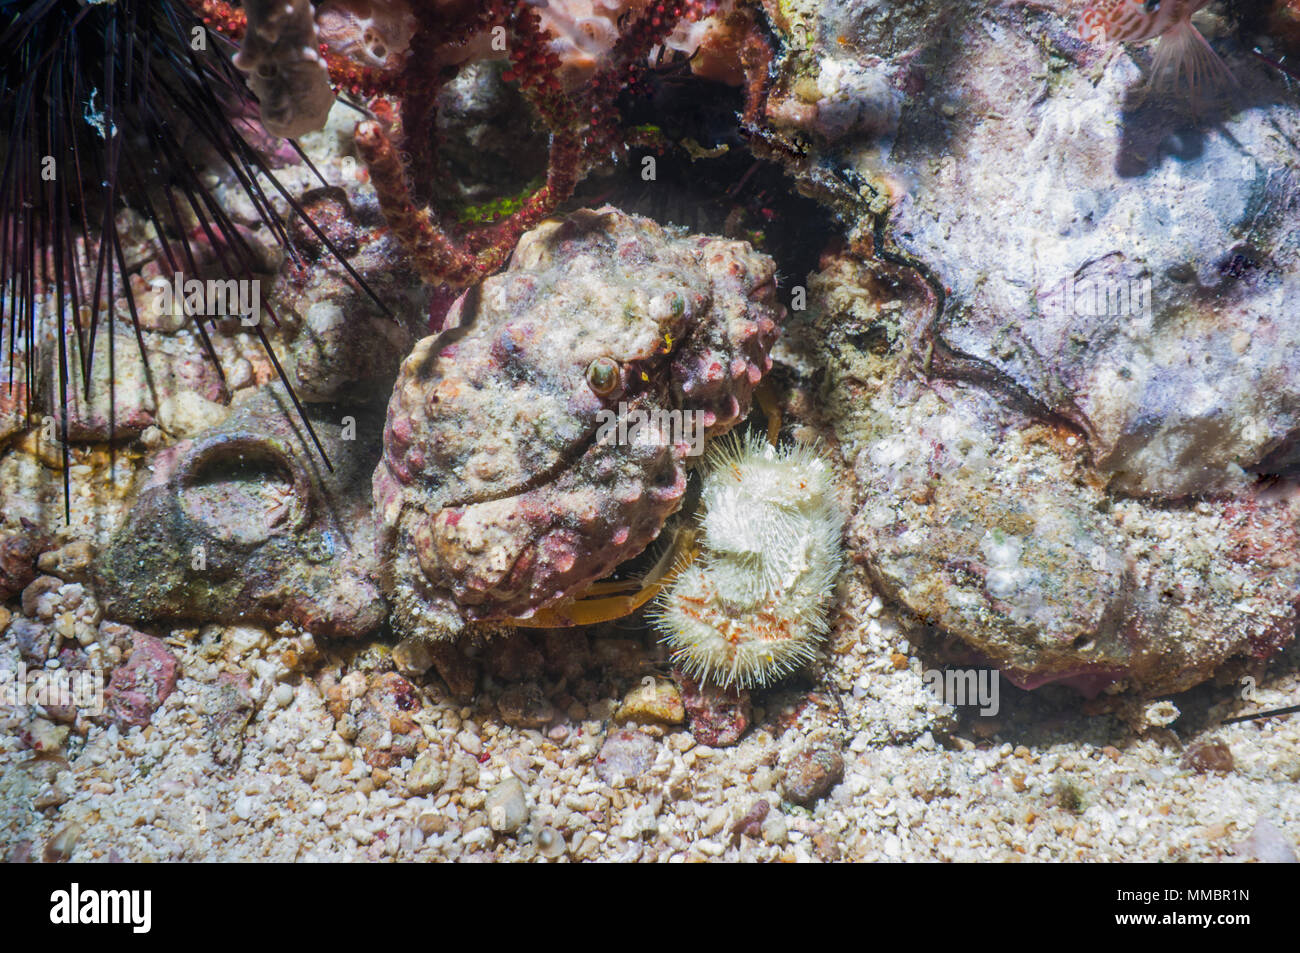 Rough box crab [Calappa gallus] feeding on an urchin.  Cebu, Malapascua Island, Philippines. Stock Photo